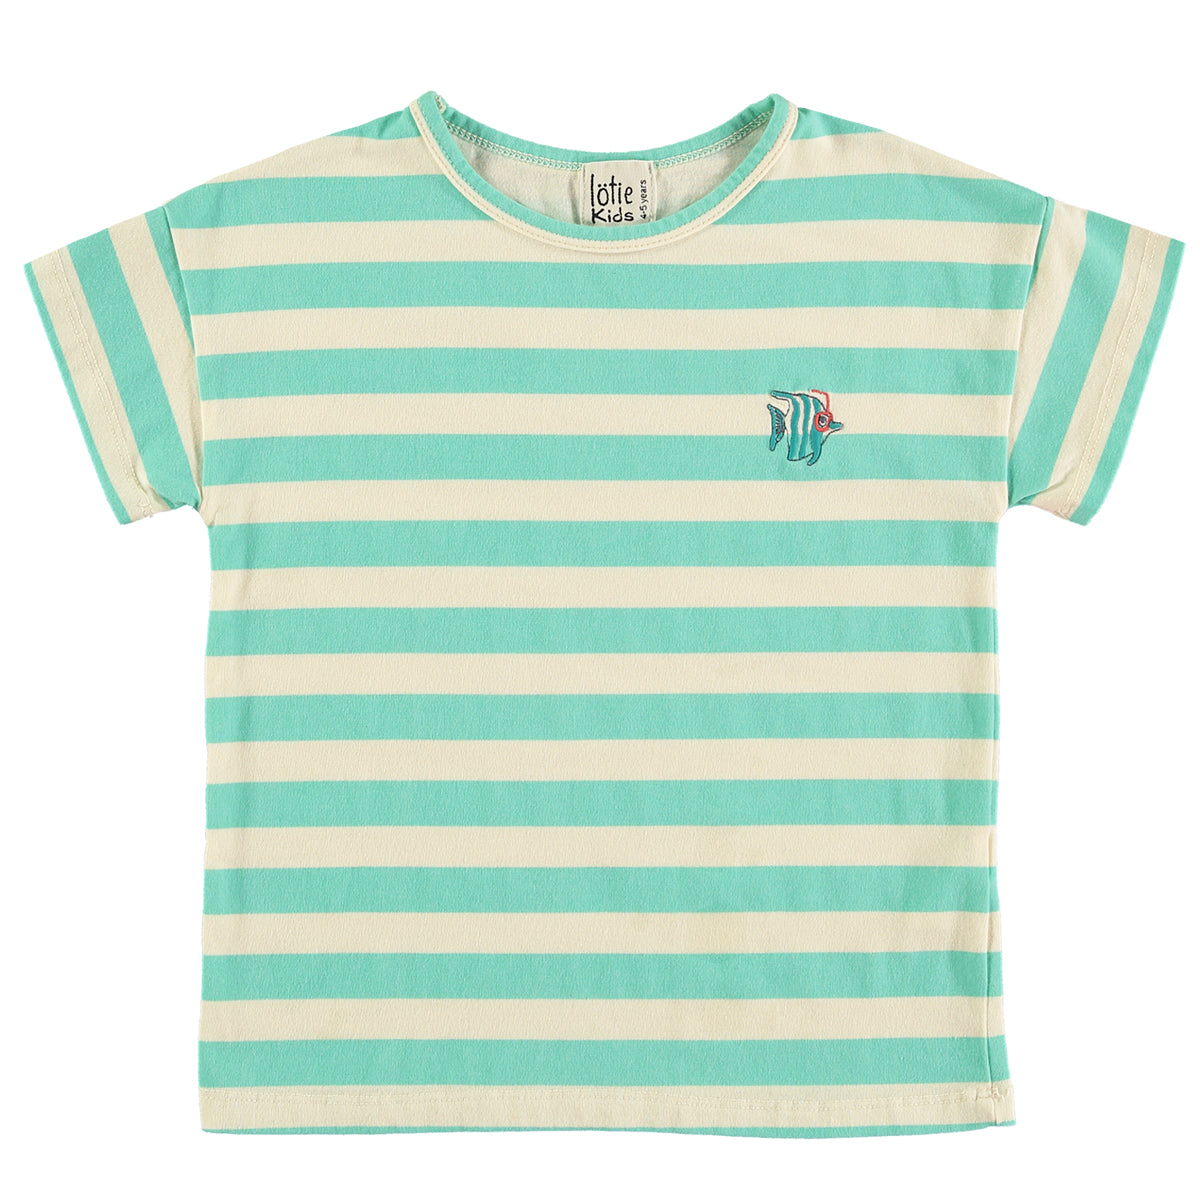 Lotie Kids - stripes t-shirt - fish - off white